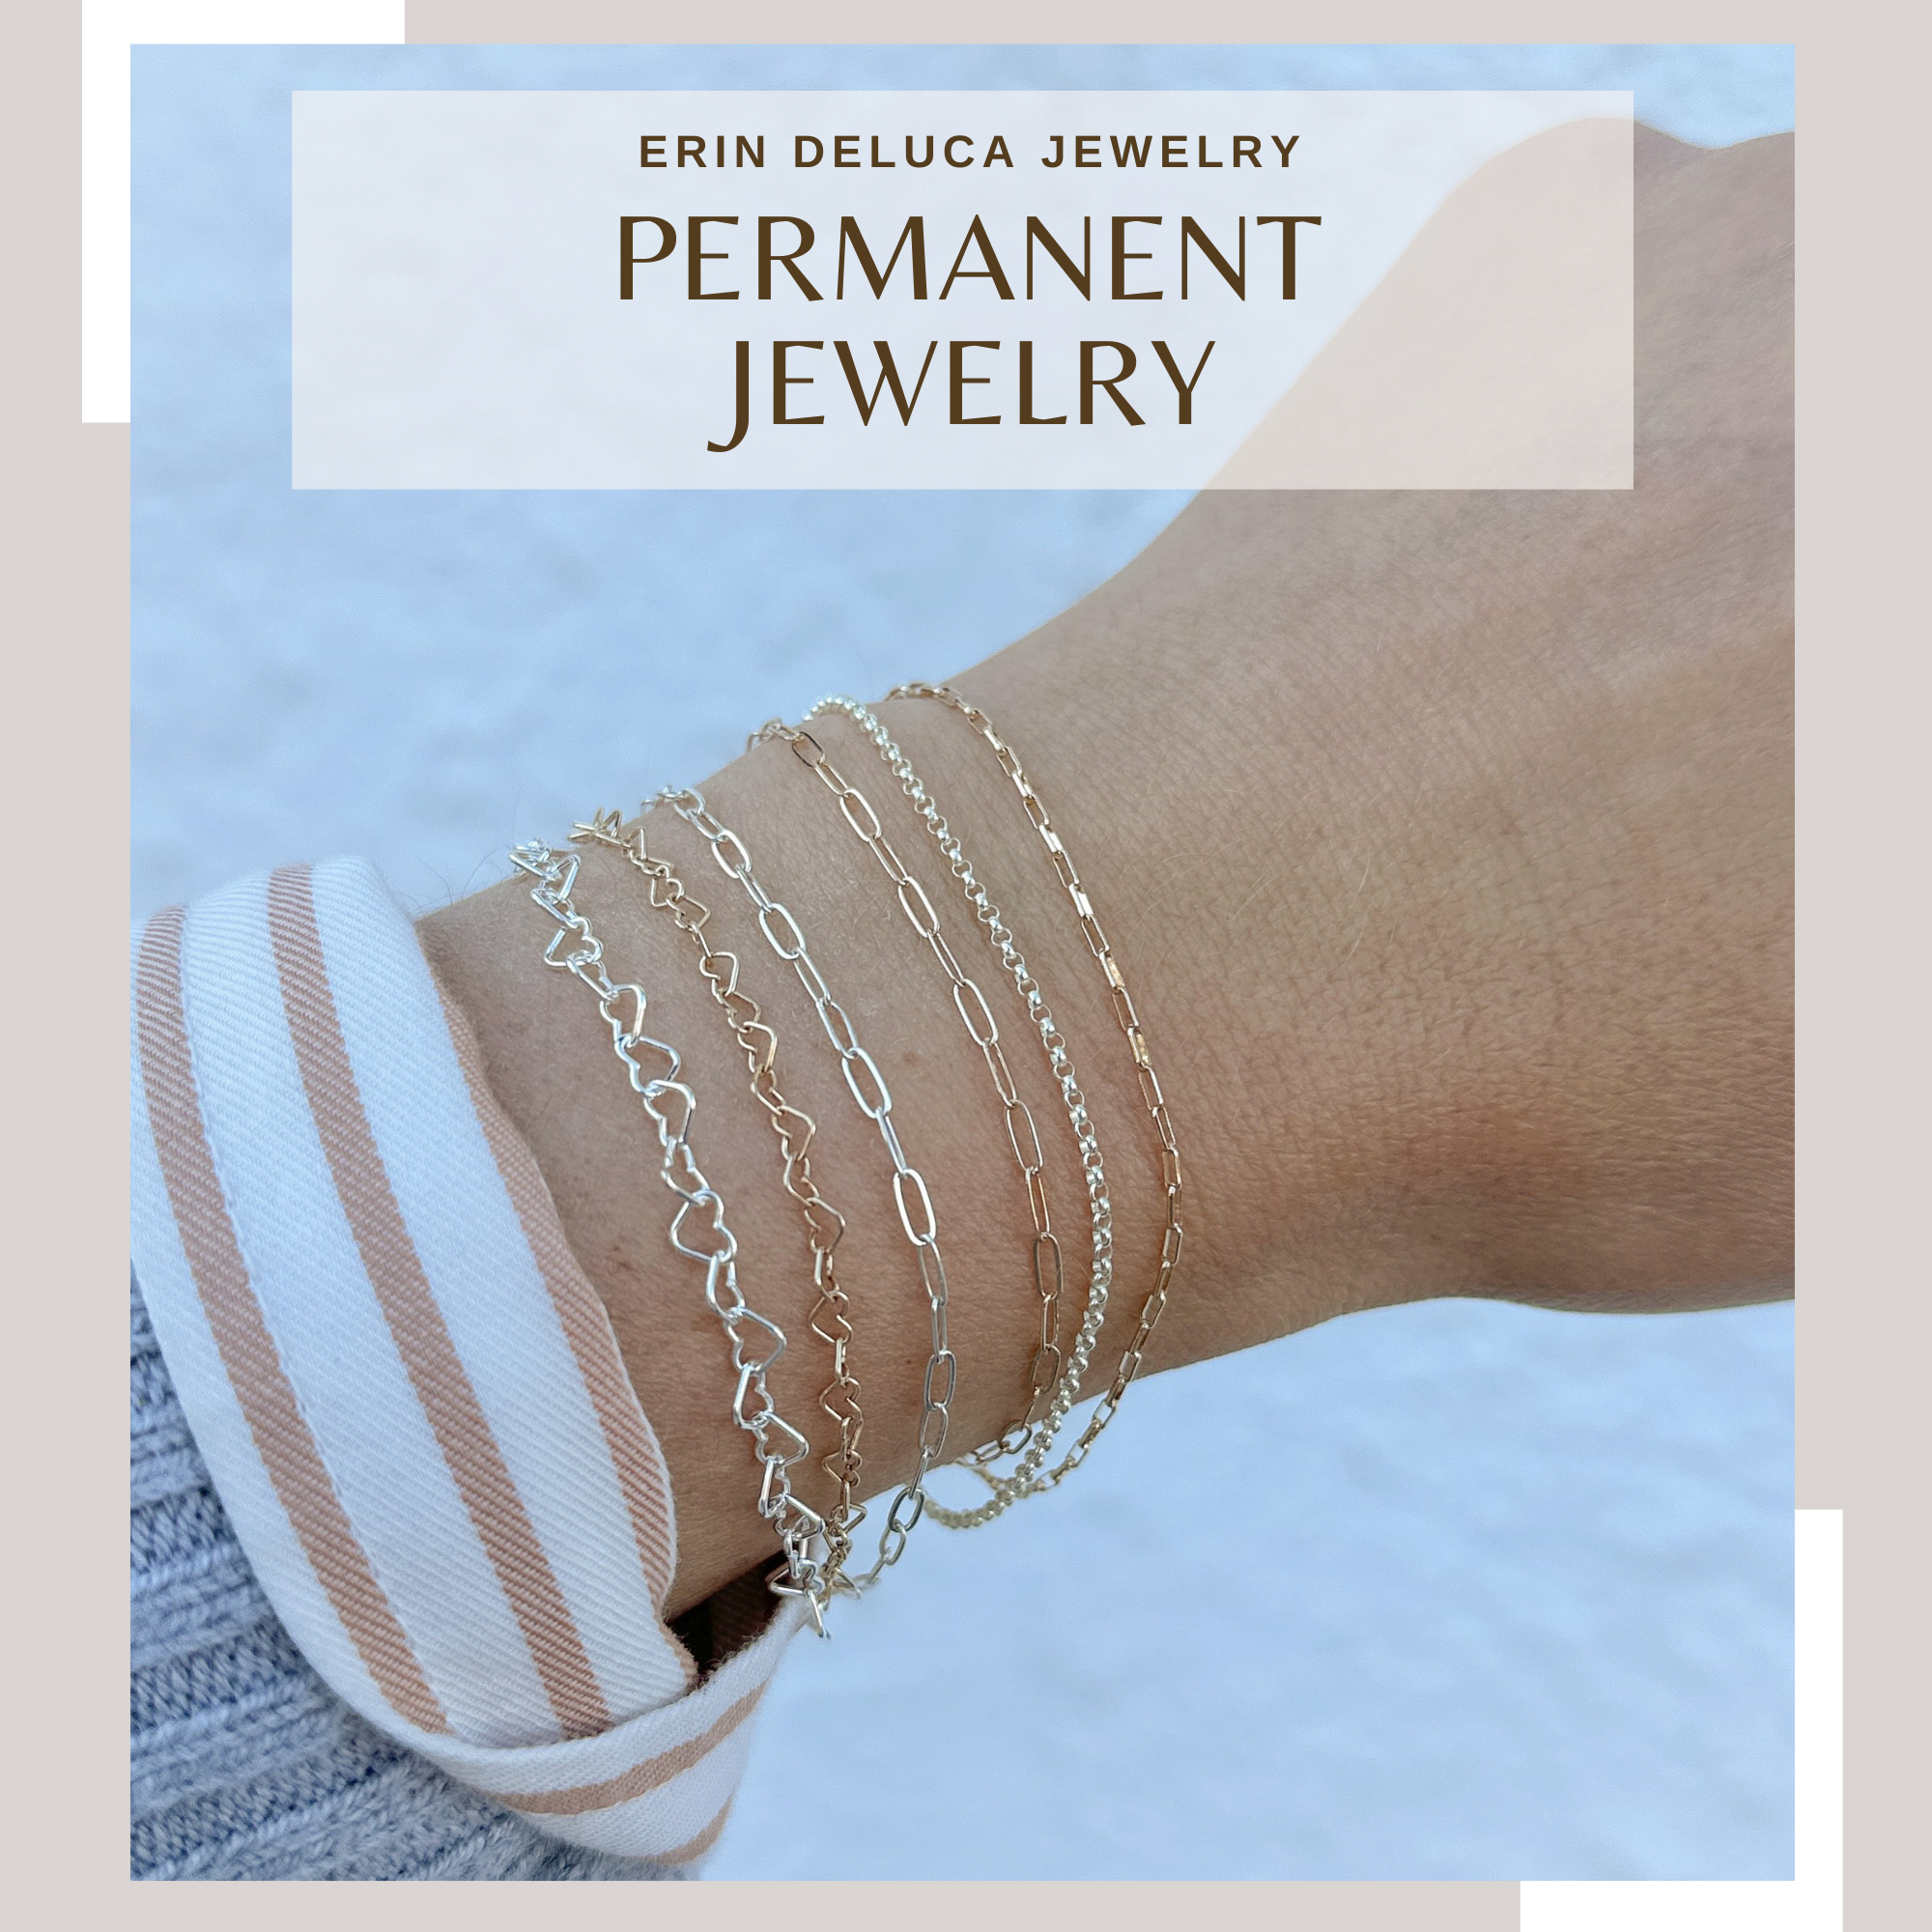 Permanent Jewelry in Connecticut! — Erin DeLuca Jewelry